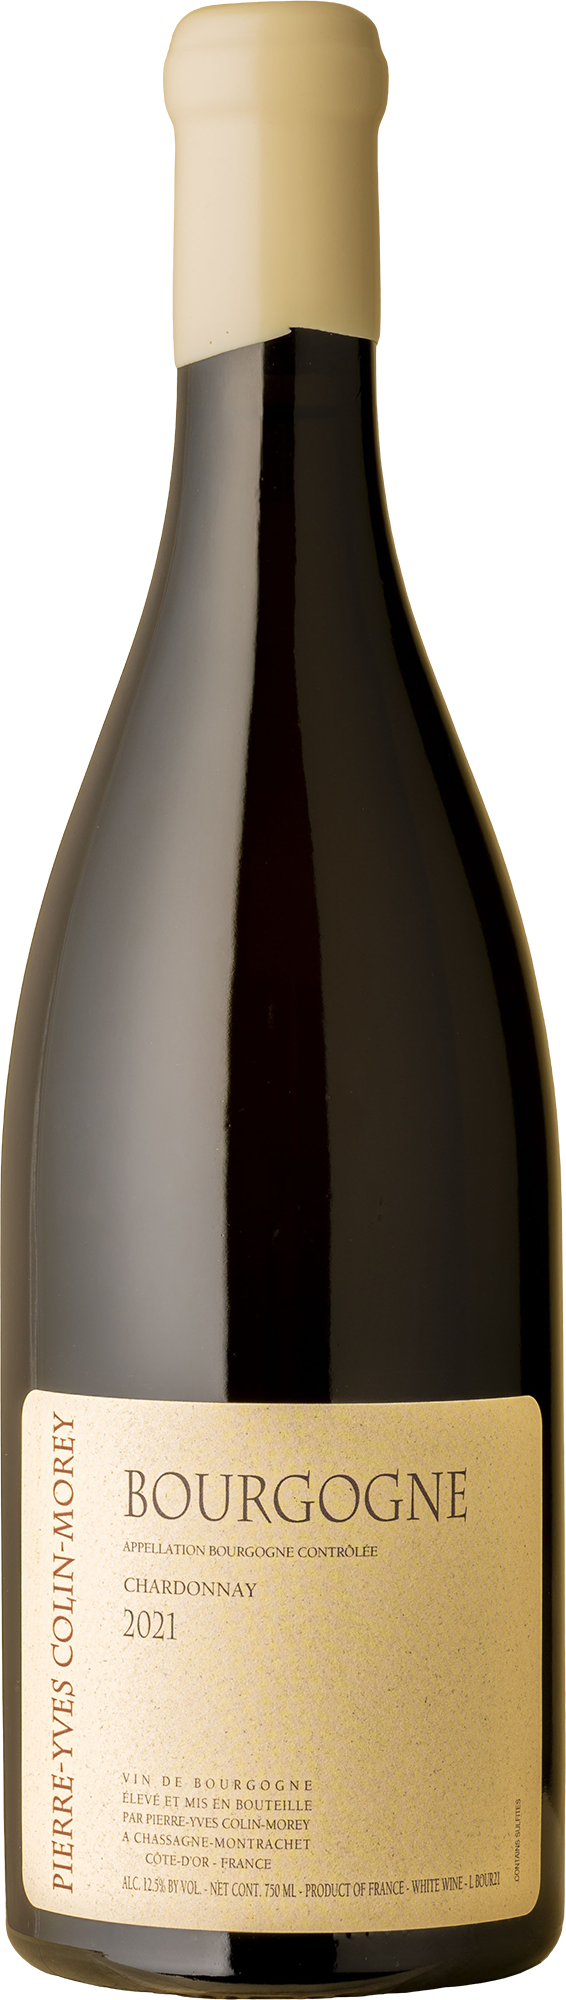 Pierre-Yves Colin-Morey - Bourgogne Blanc Chardonnay 2021 White Wine